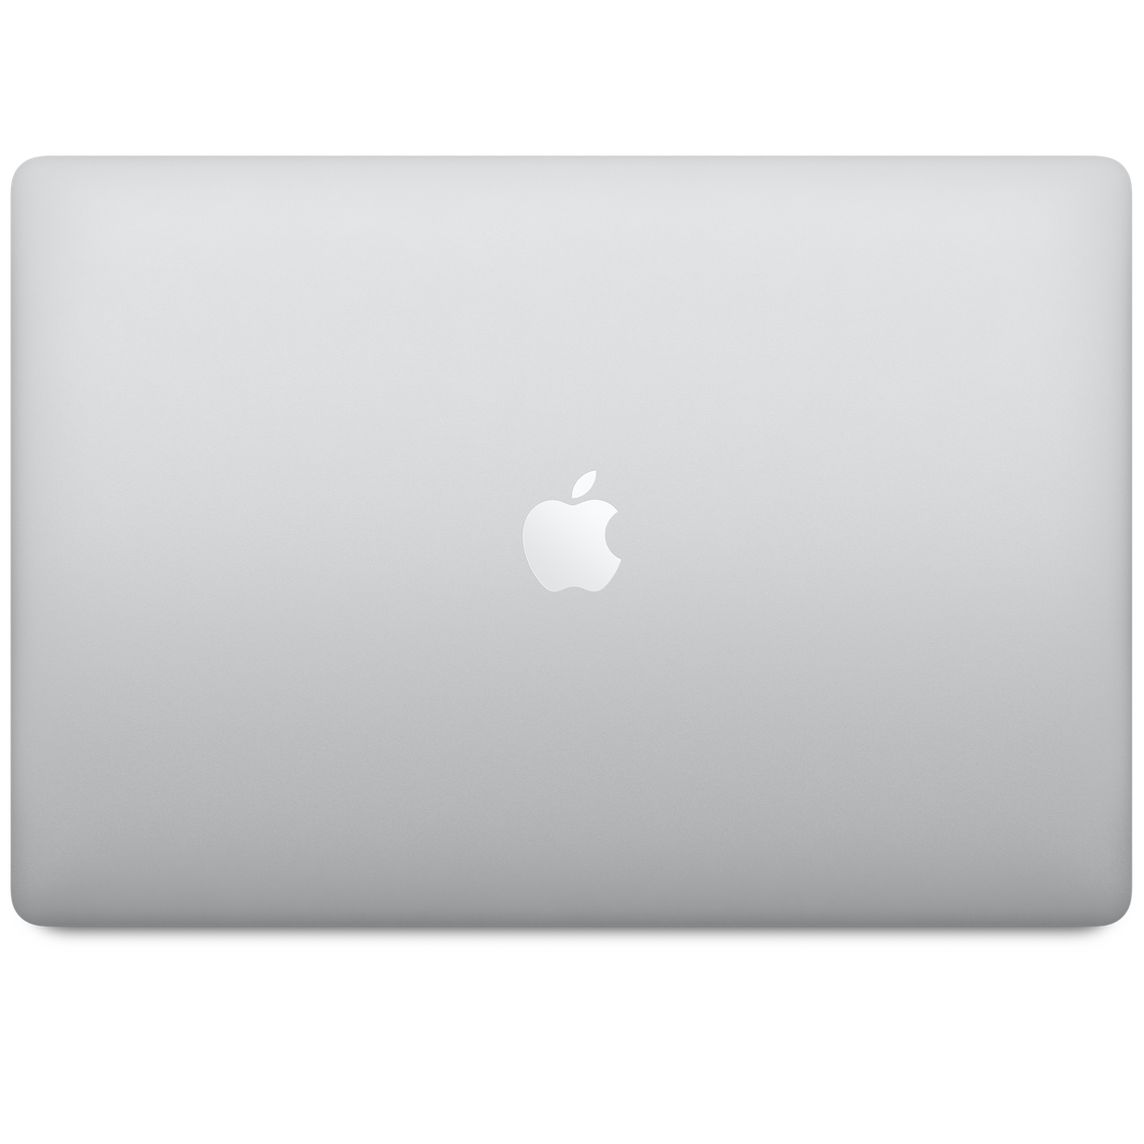 Apple MacBook Pro (15-inch 2018) 2.6GHz i7 16GB RAM 512GB SSD 560X GPU